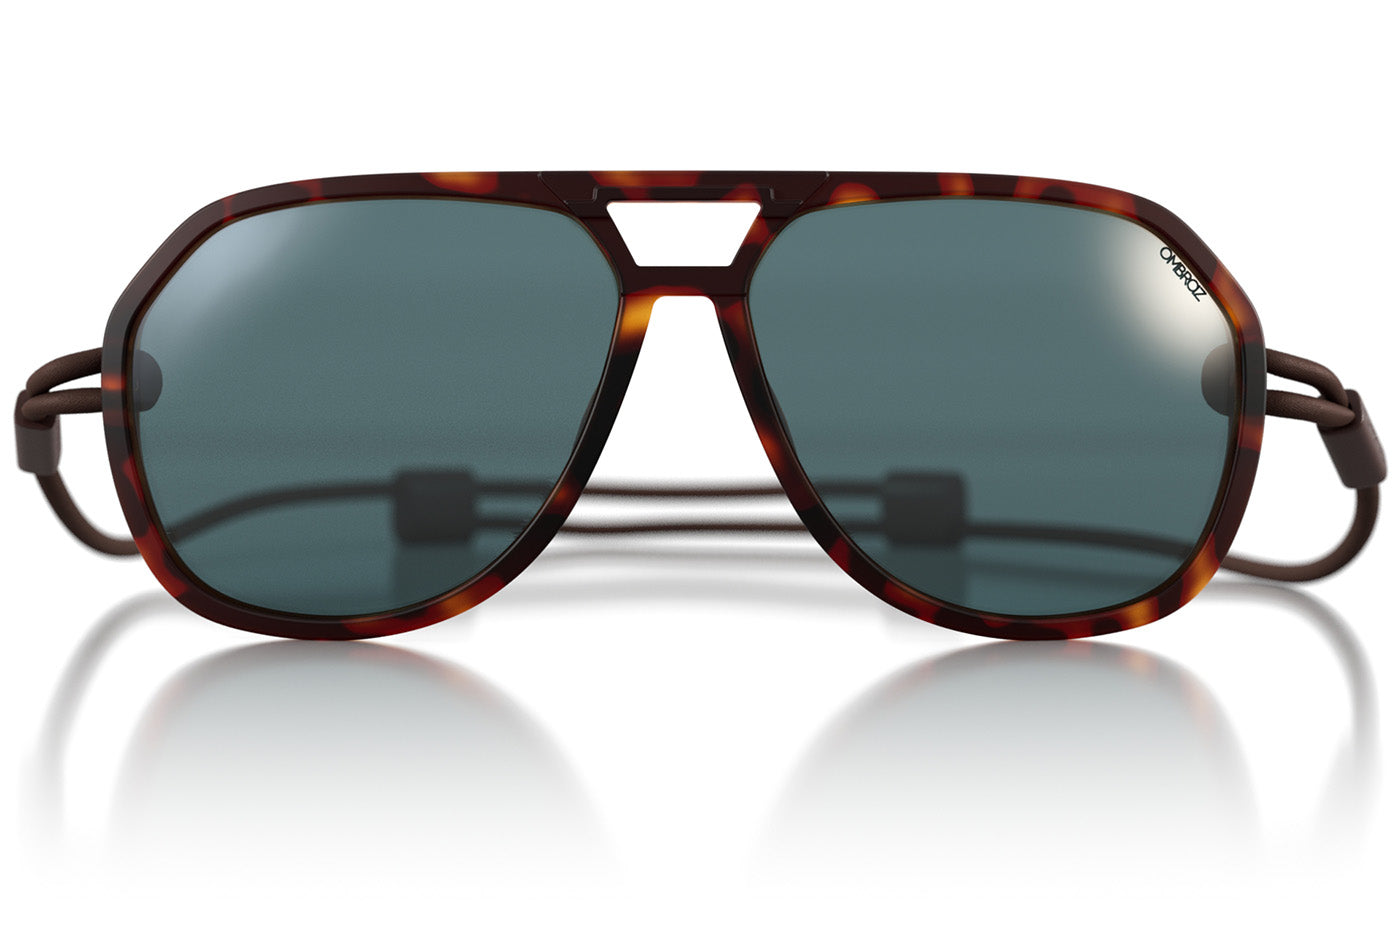 Ombraz Classics Regular Charcoal Polarized Grey Sunglasses